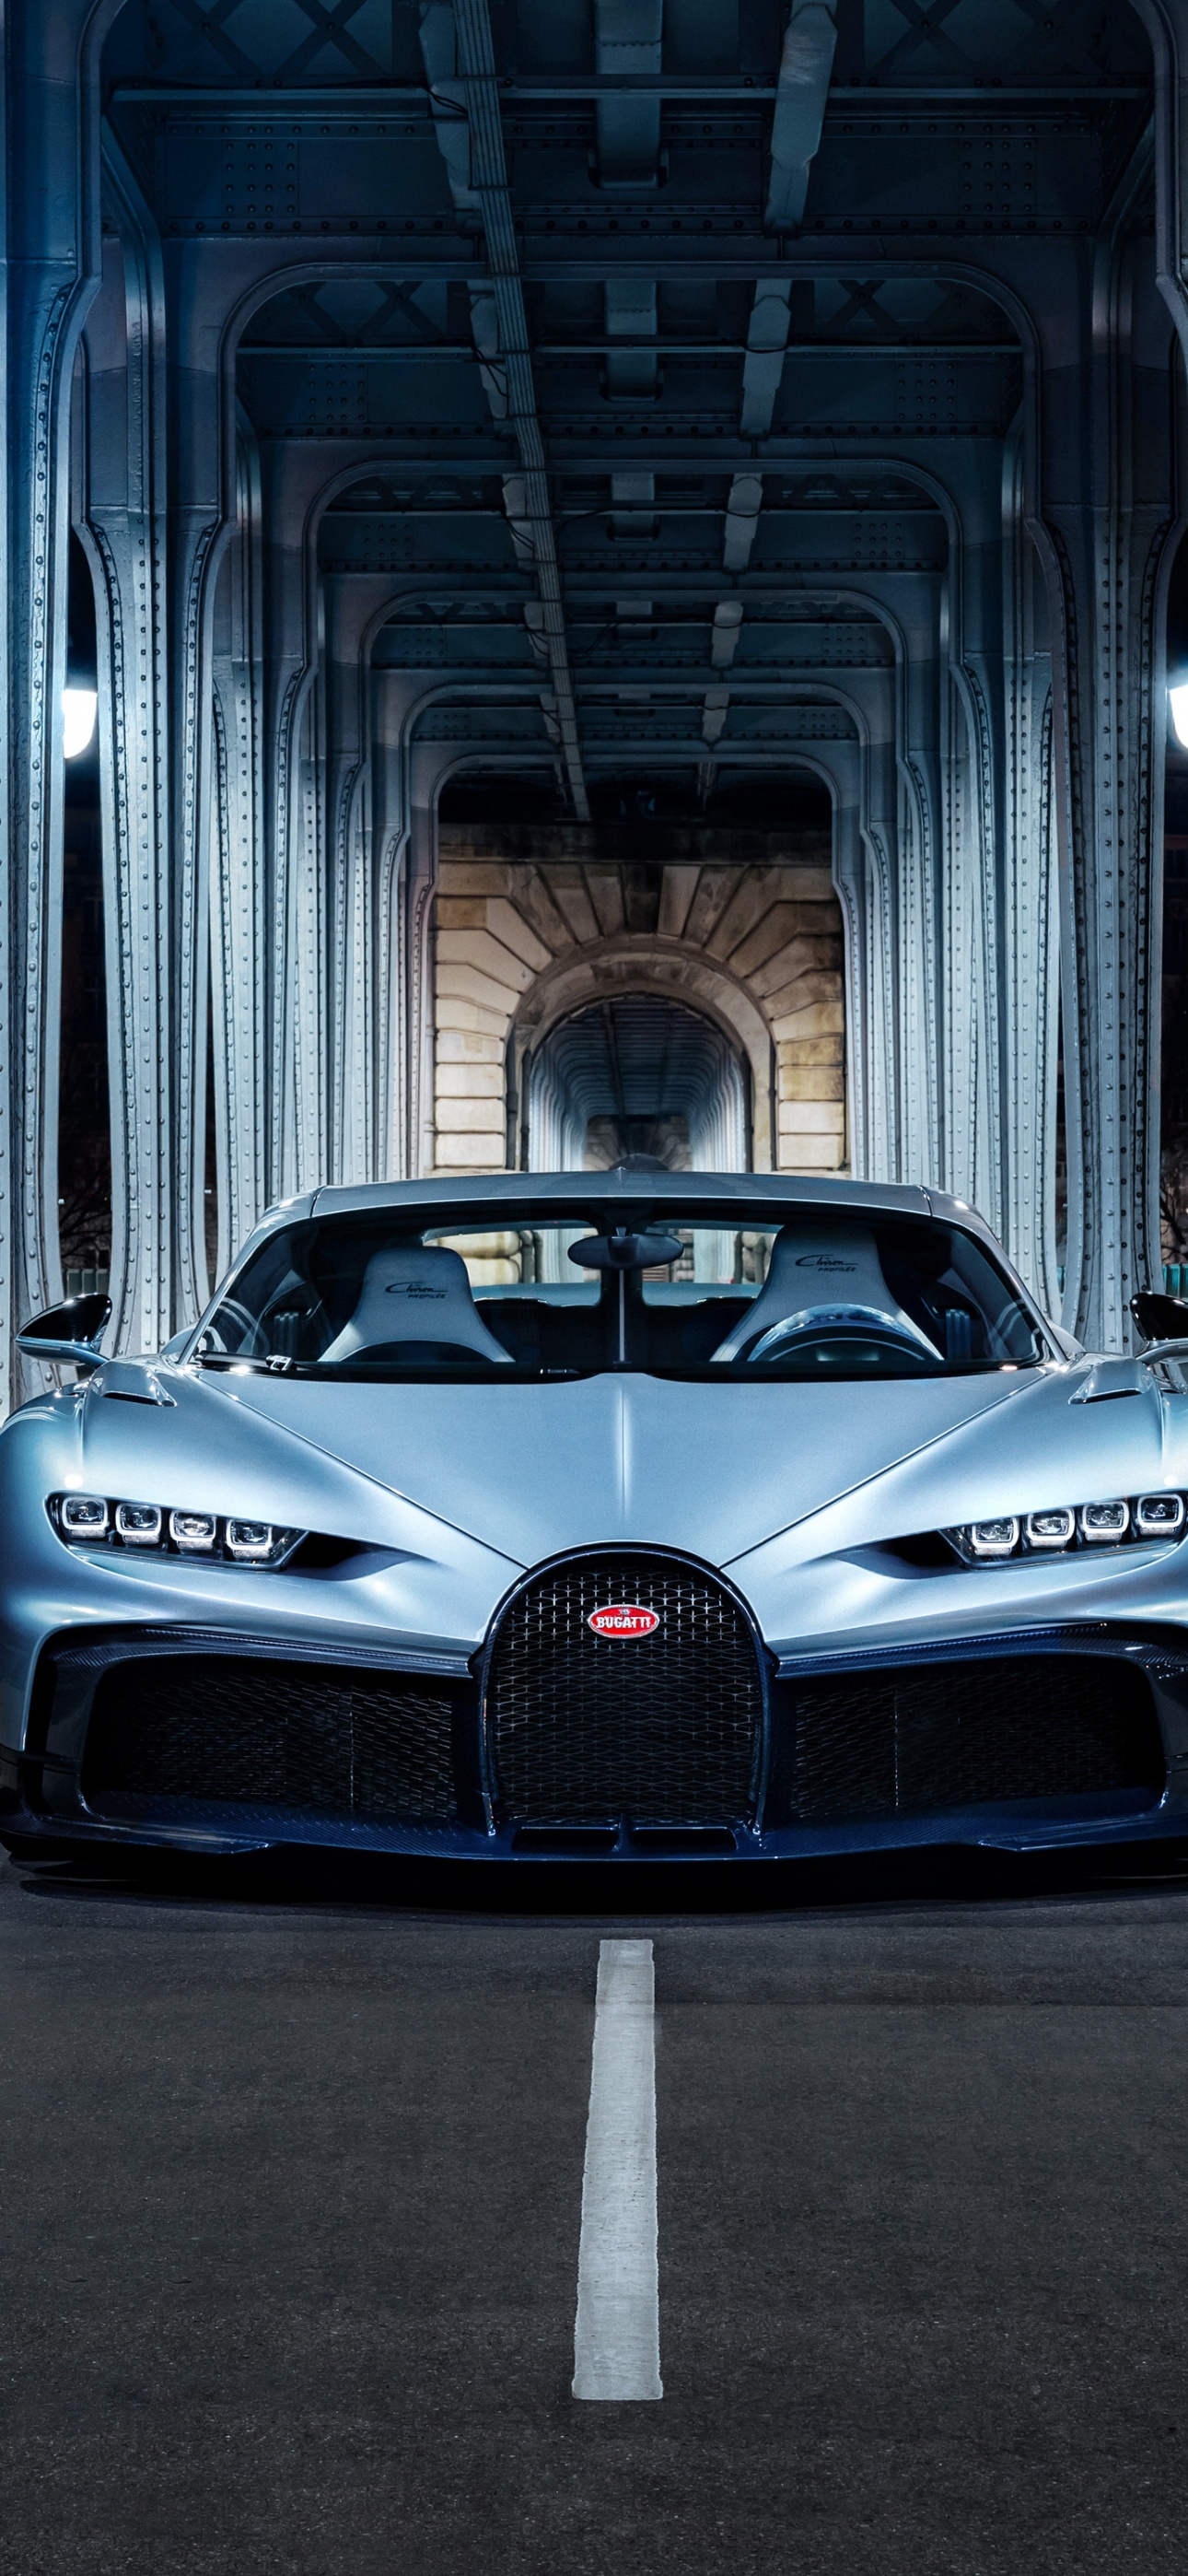 Bugatti Chiron Images - Chiron Car Images, Interior & Exterior Photos